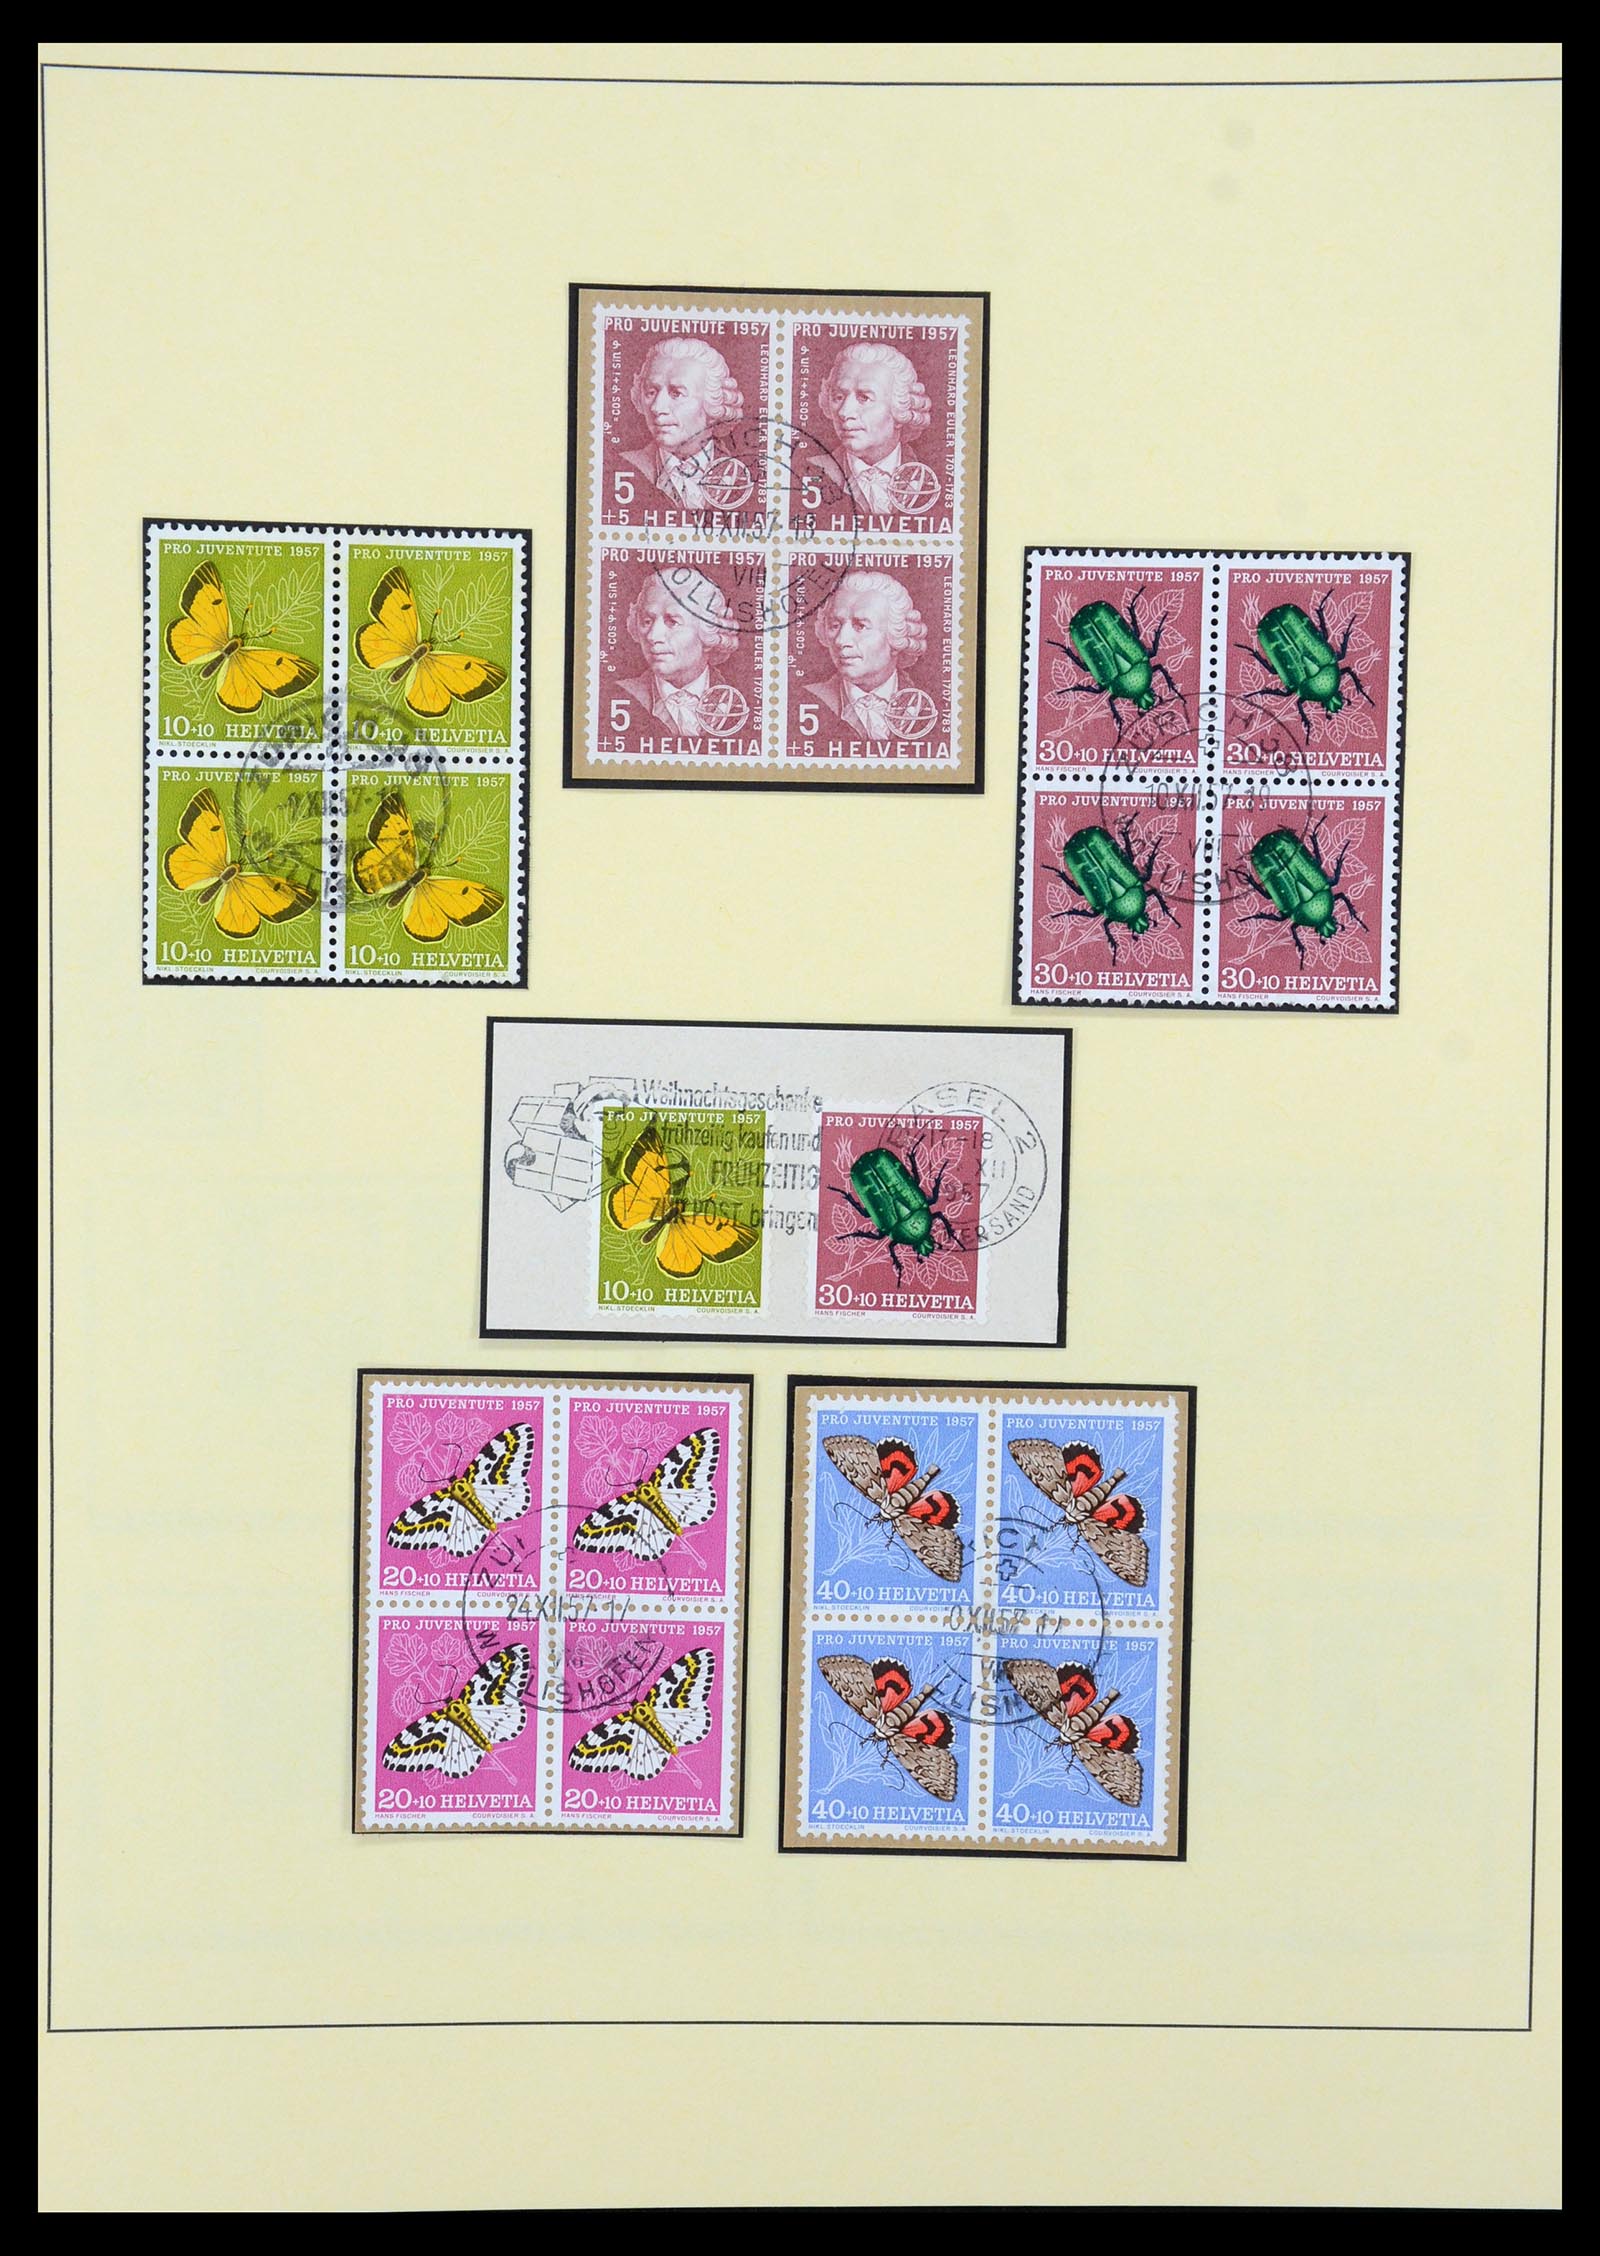 35668 012 - Stamp Collection 35668 Switzerland Pro Juventute and Pro Patria 1910-197